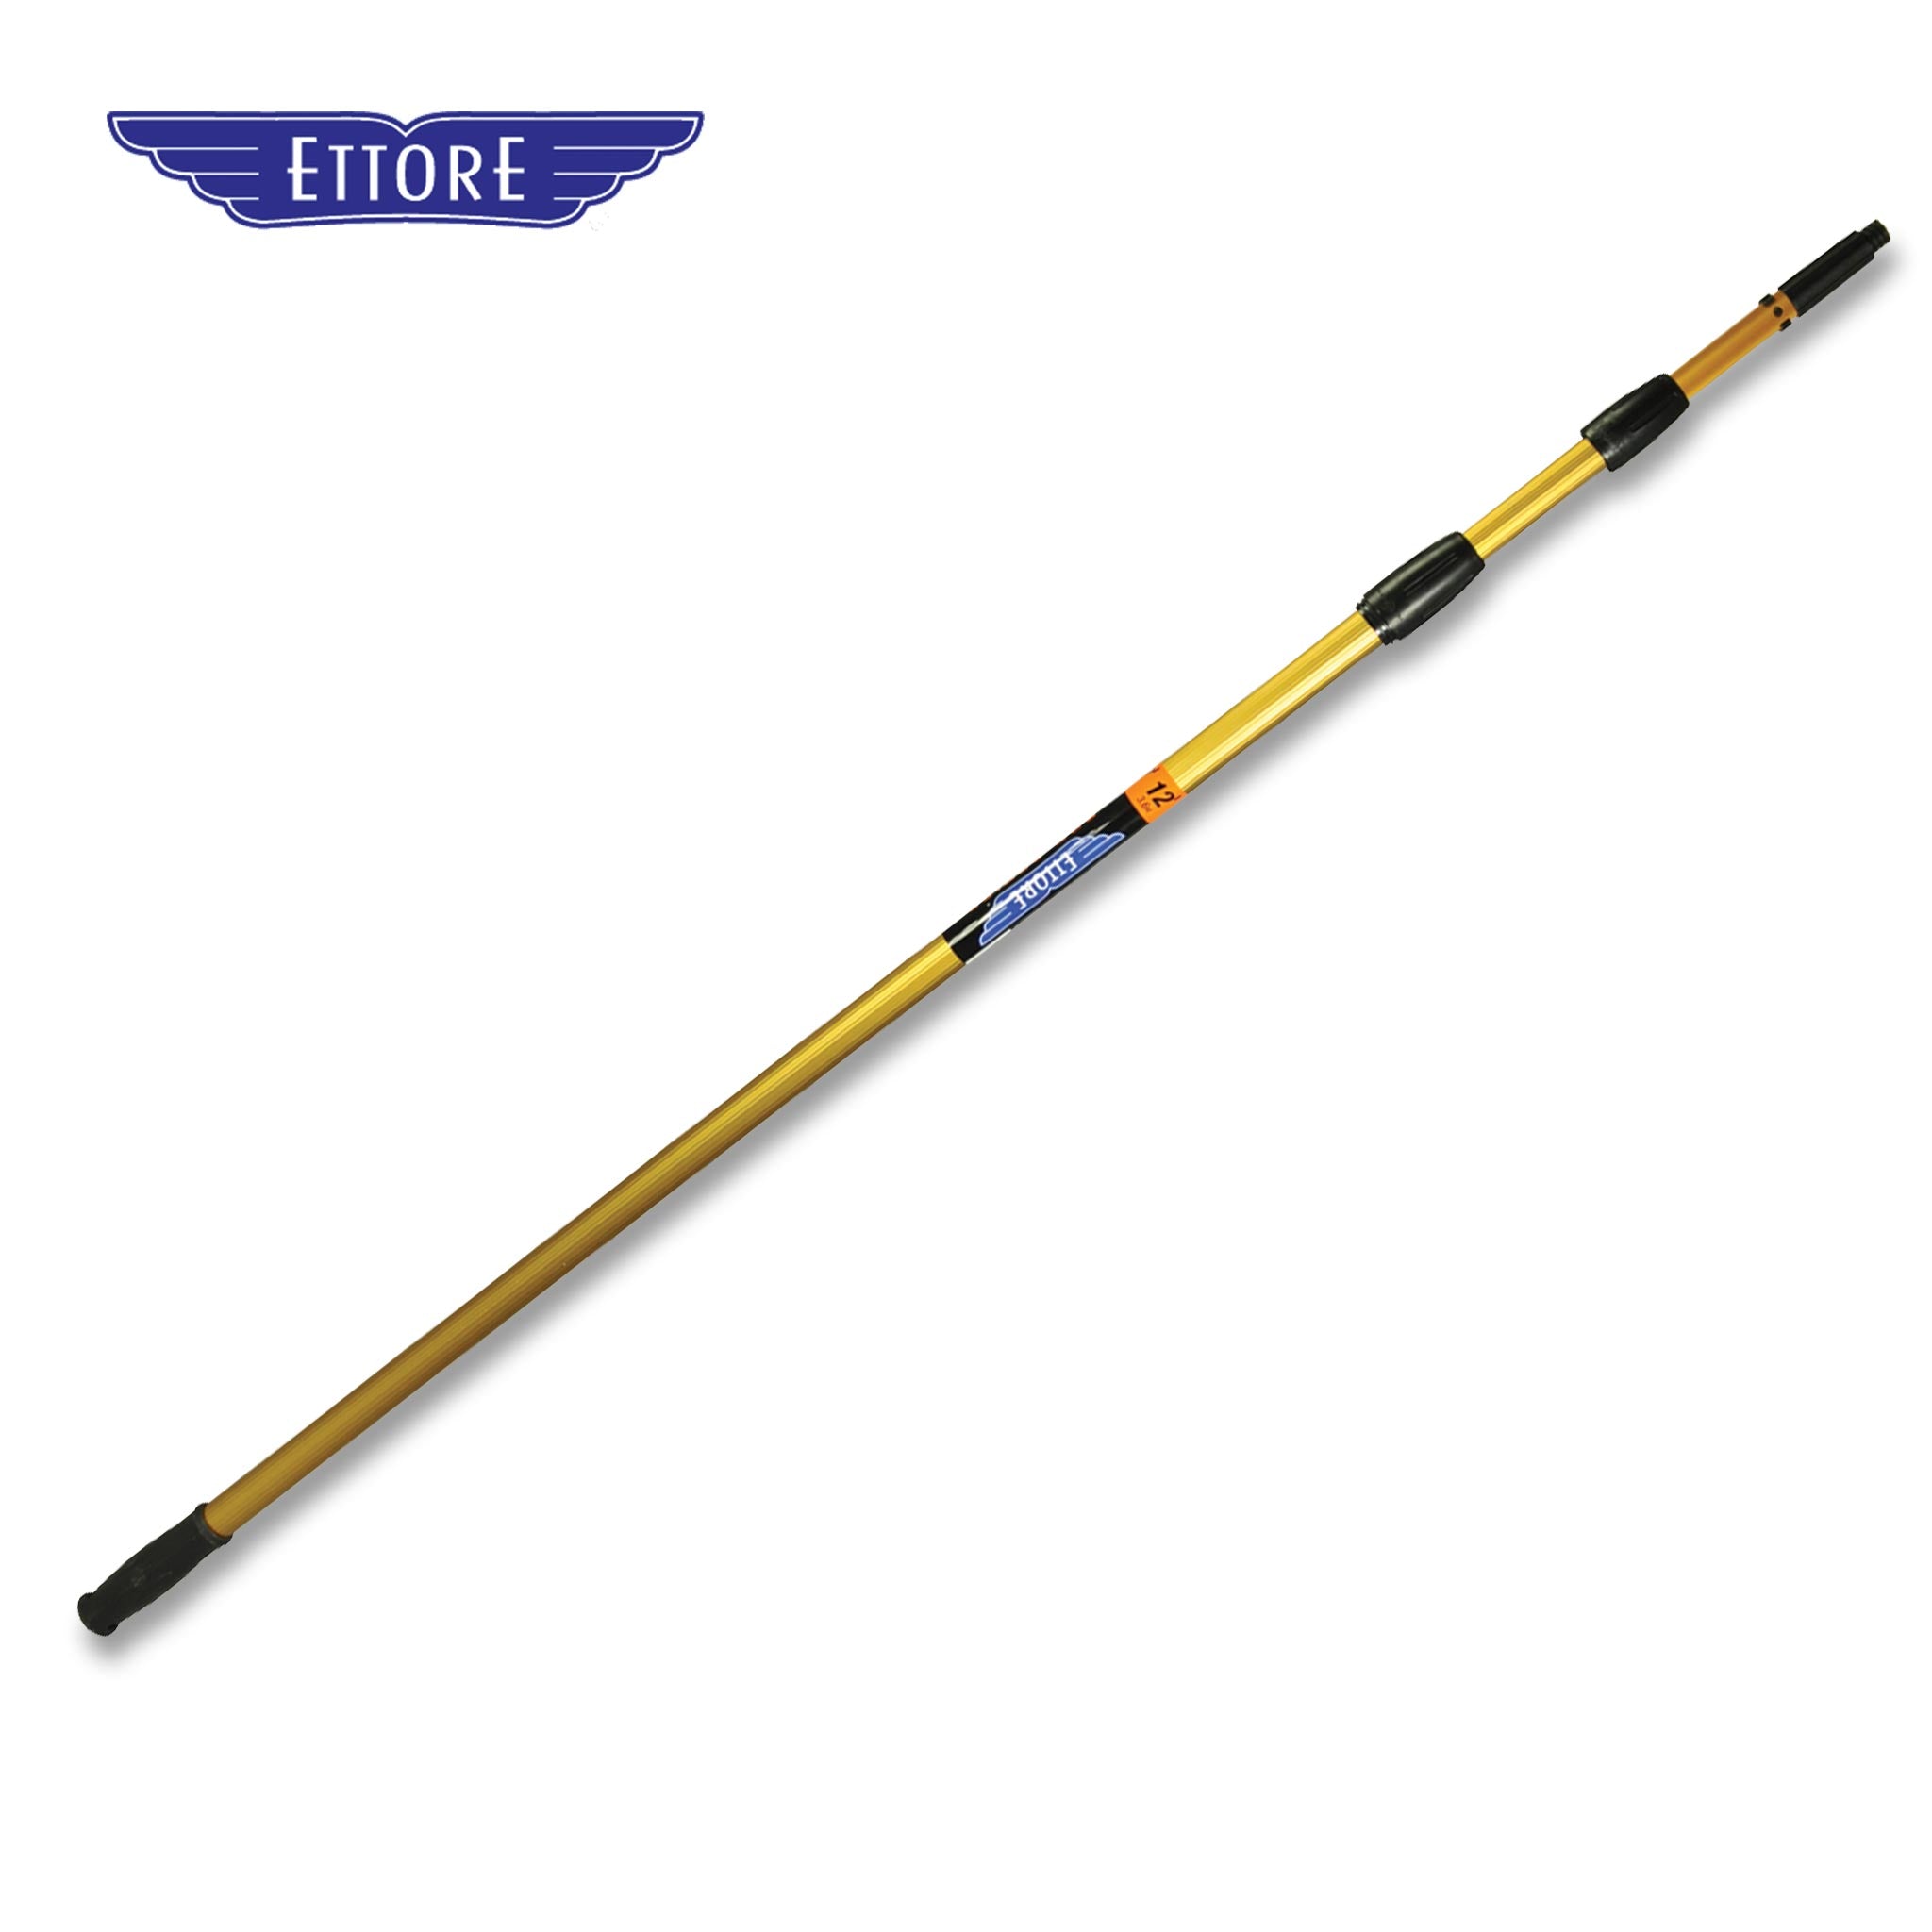 Ettore Pro Series Extension Pole